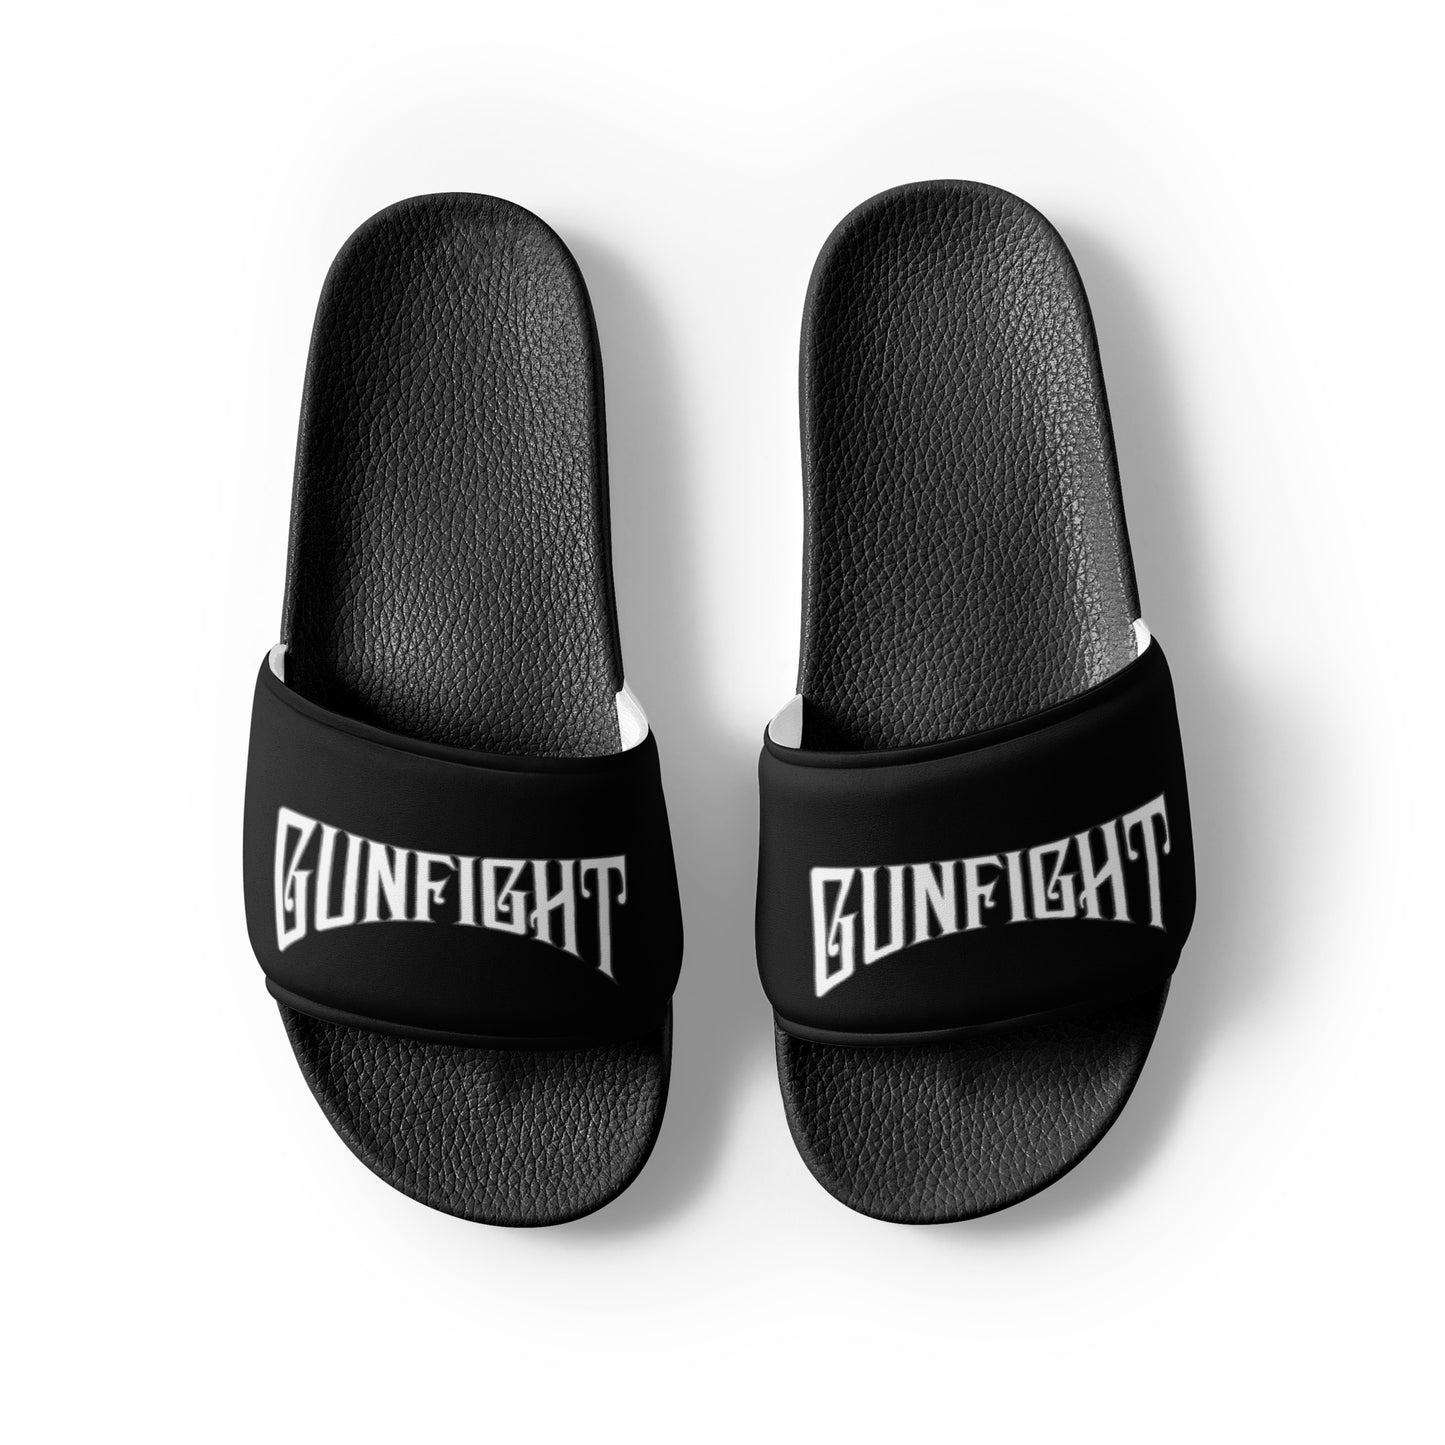 GunFight slides